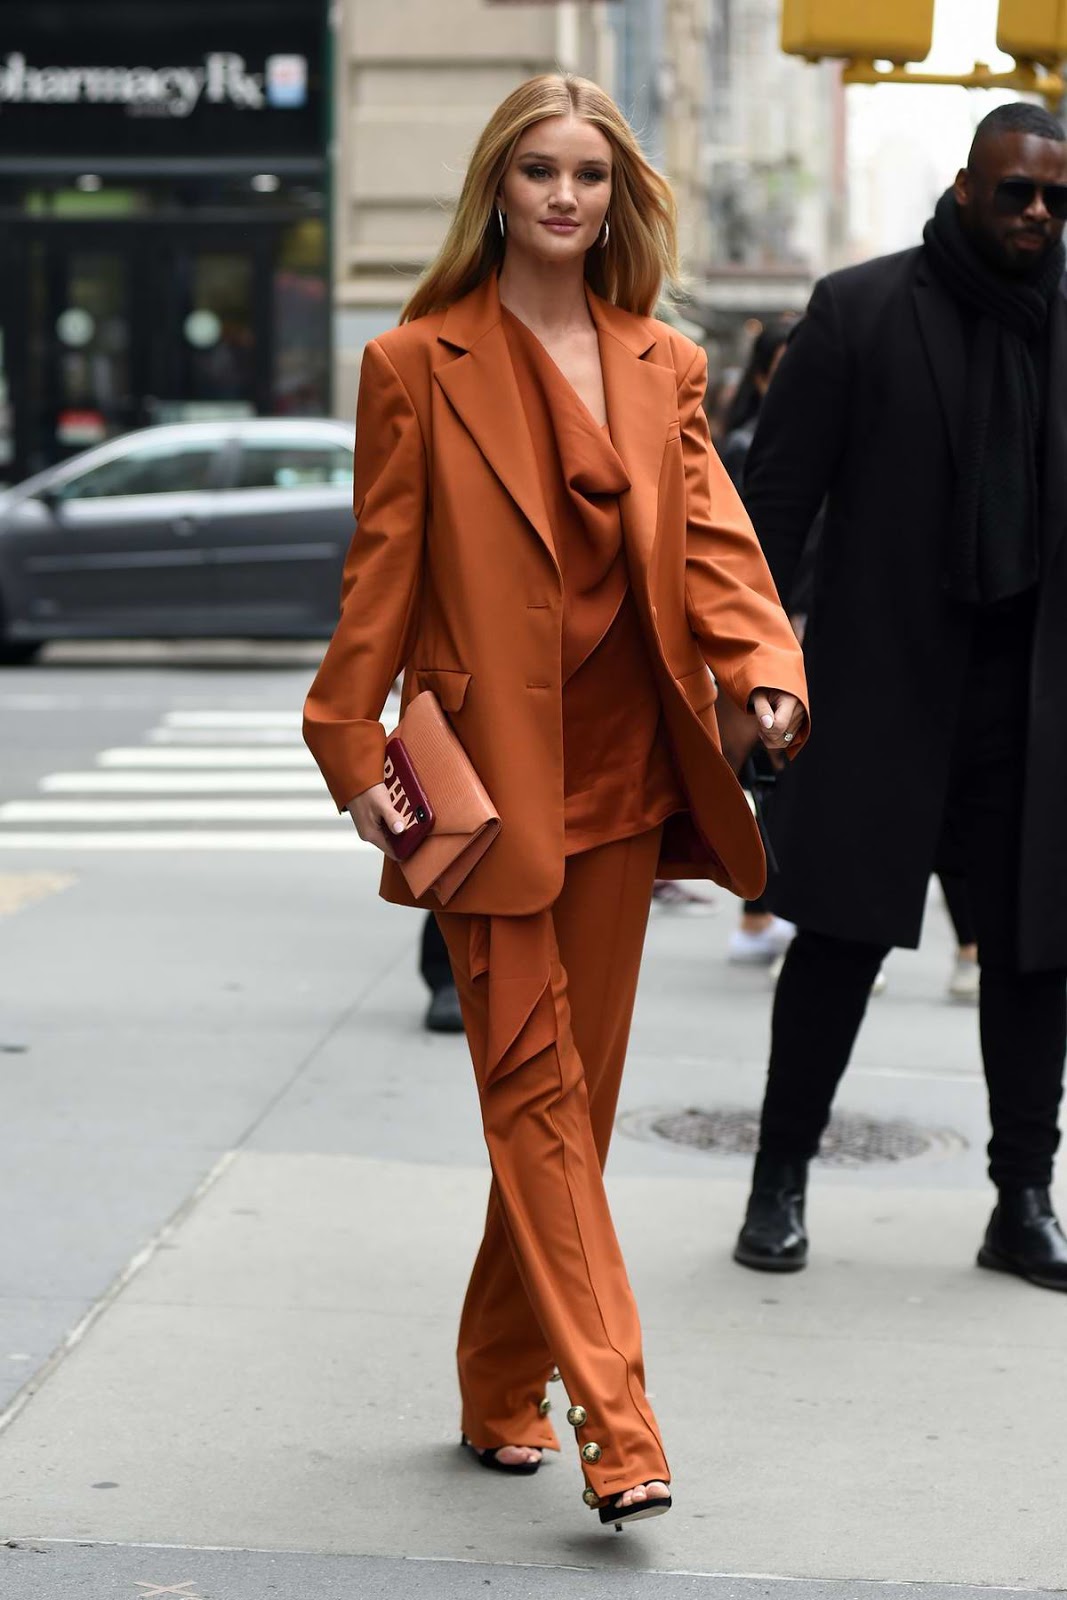 Rosie Huntington-Whiteley – Celebrity Street Style Fashion in New York City